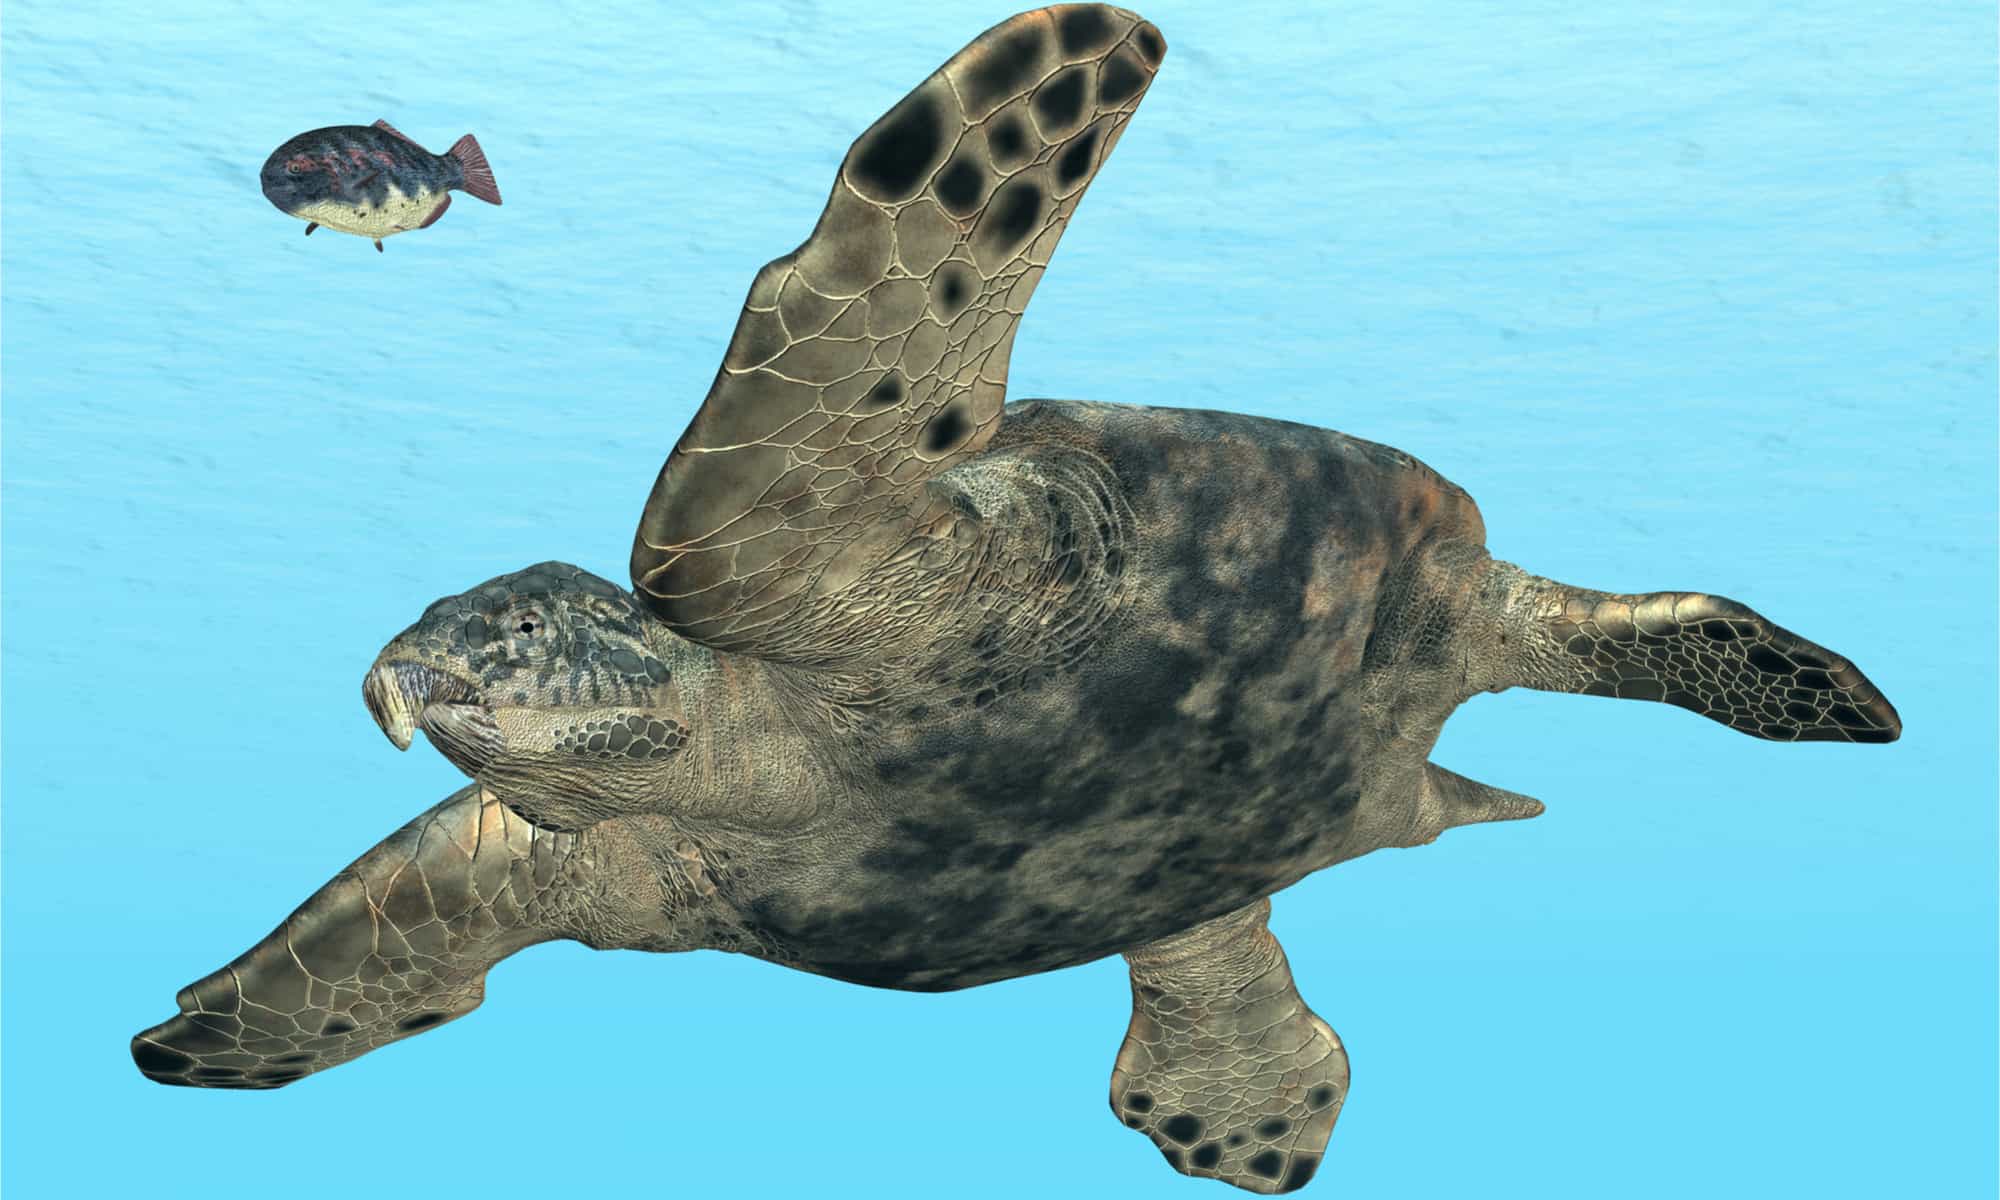 A digital illustration of a sea turtle swimming in the sea.